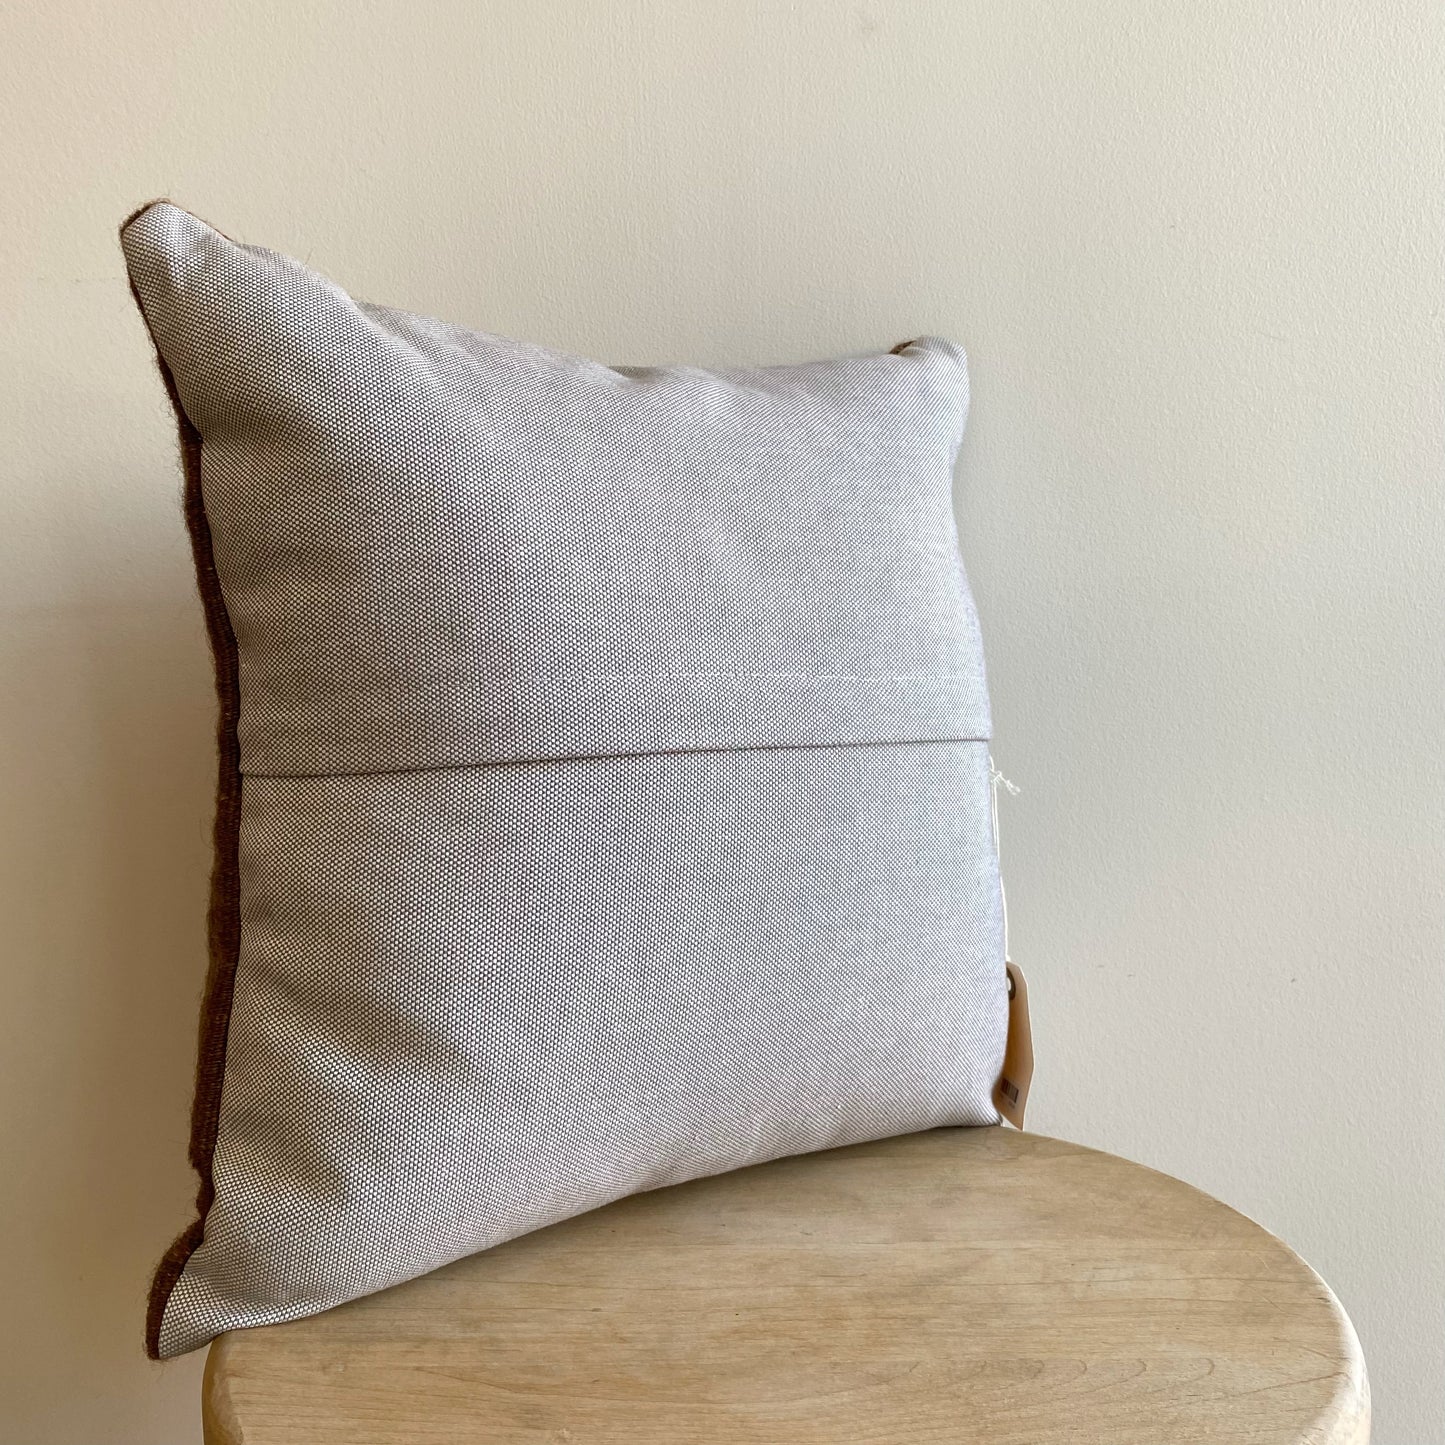 Handwoven Turkish Pillow (16x16)